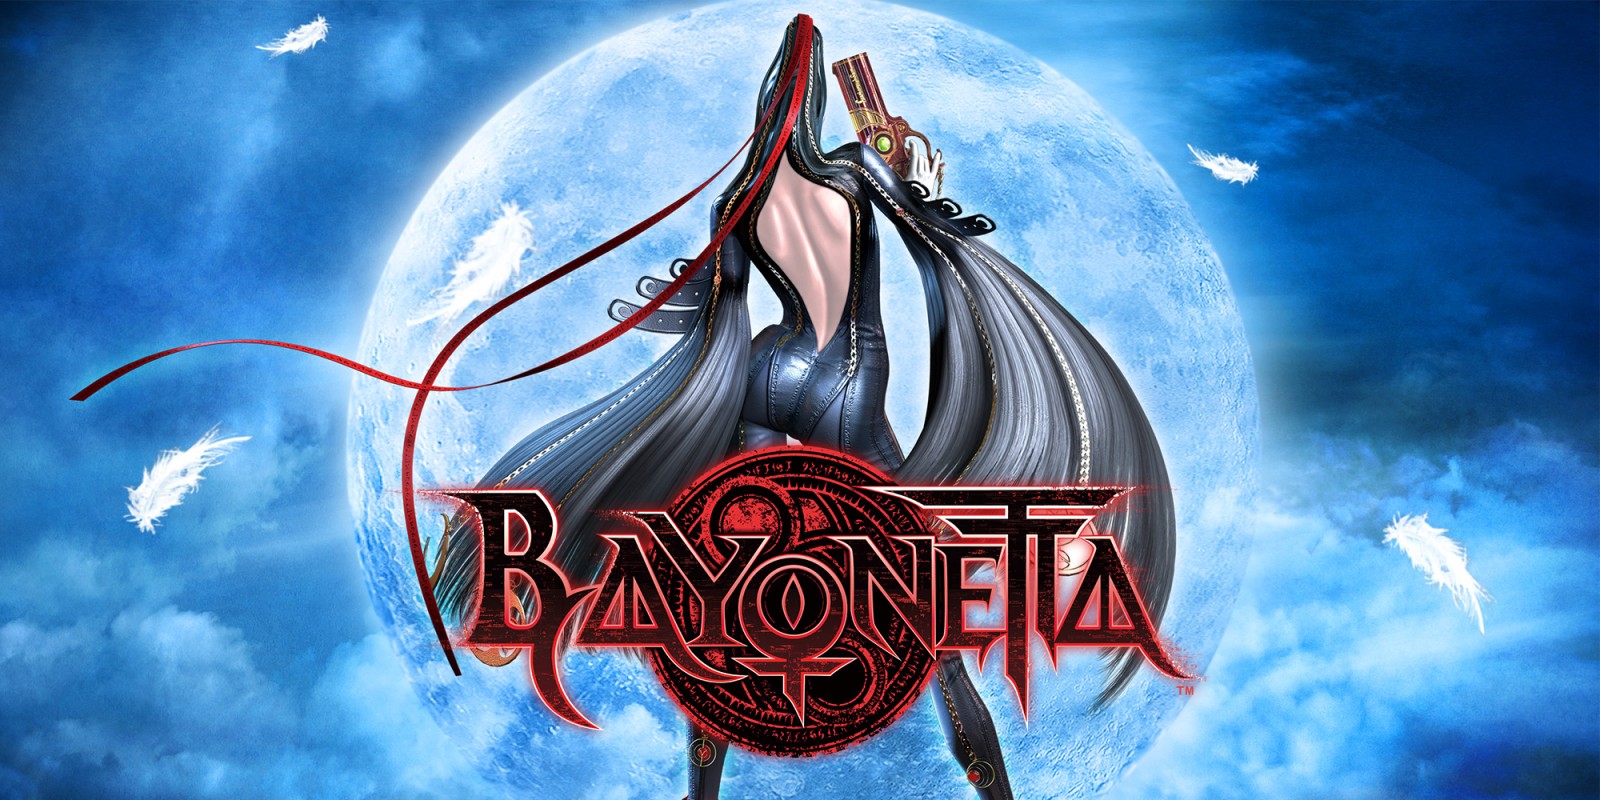 bayonetta nintendo download free